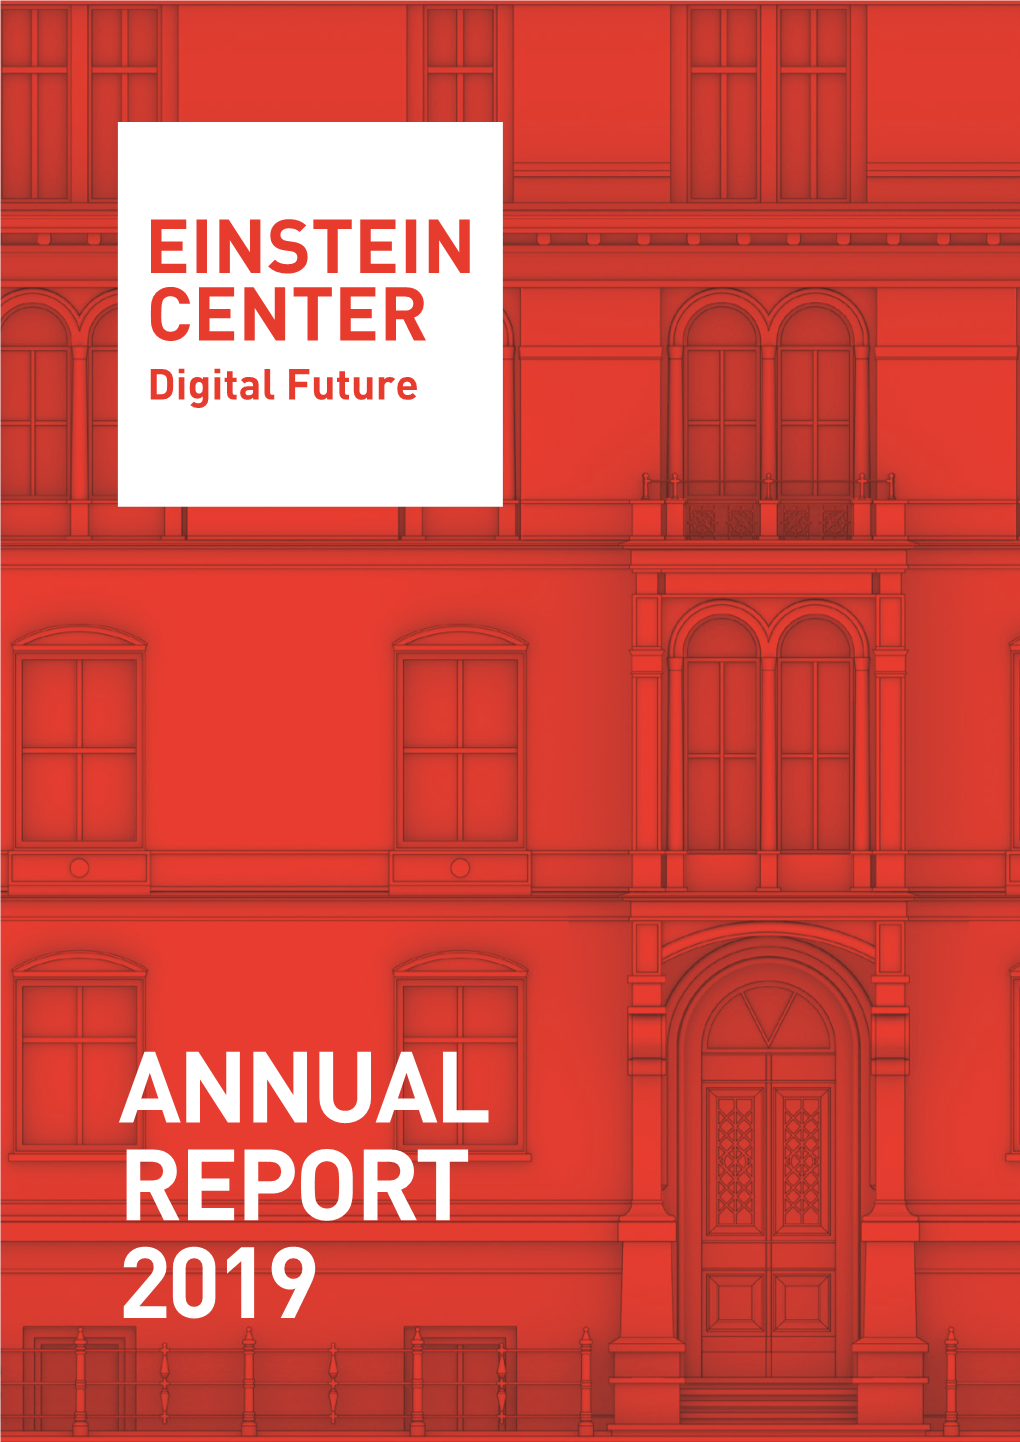 Annual Report 2019 / Digital Future Begins Preface